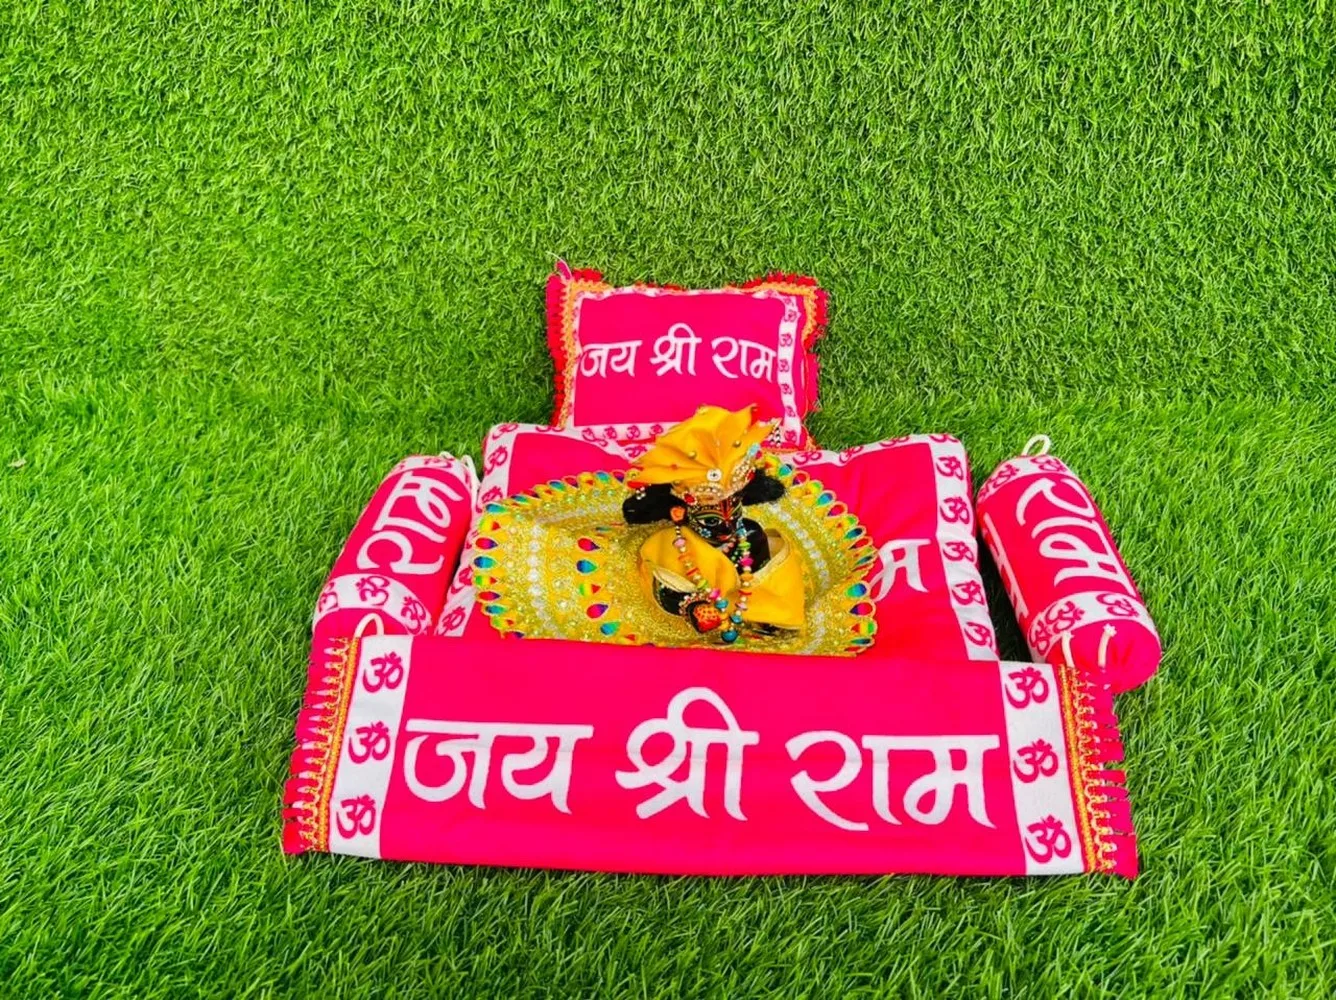 Jai Shree Ram Text Printed Laddu Gopal Bedset, 5 pieces, Pink